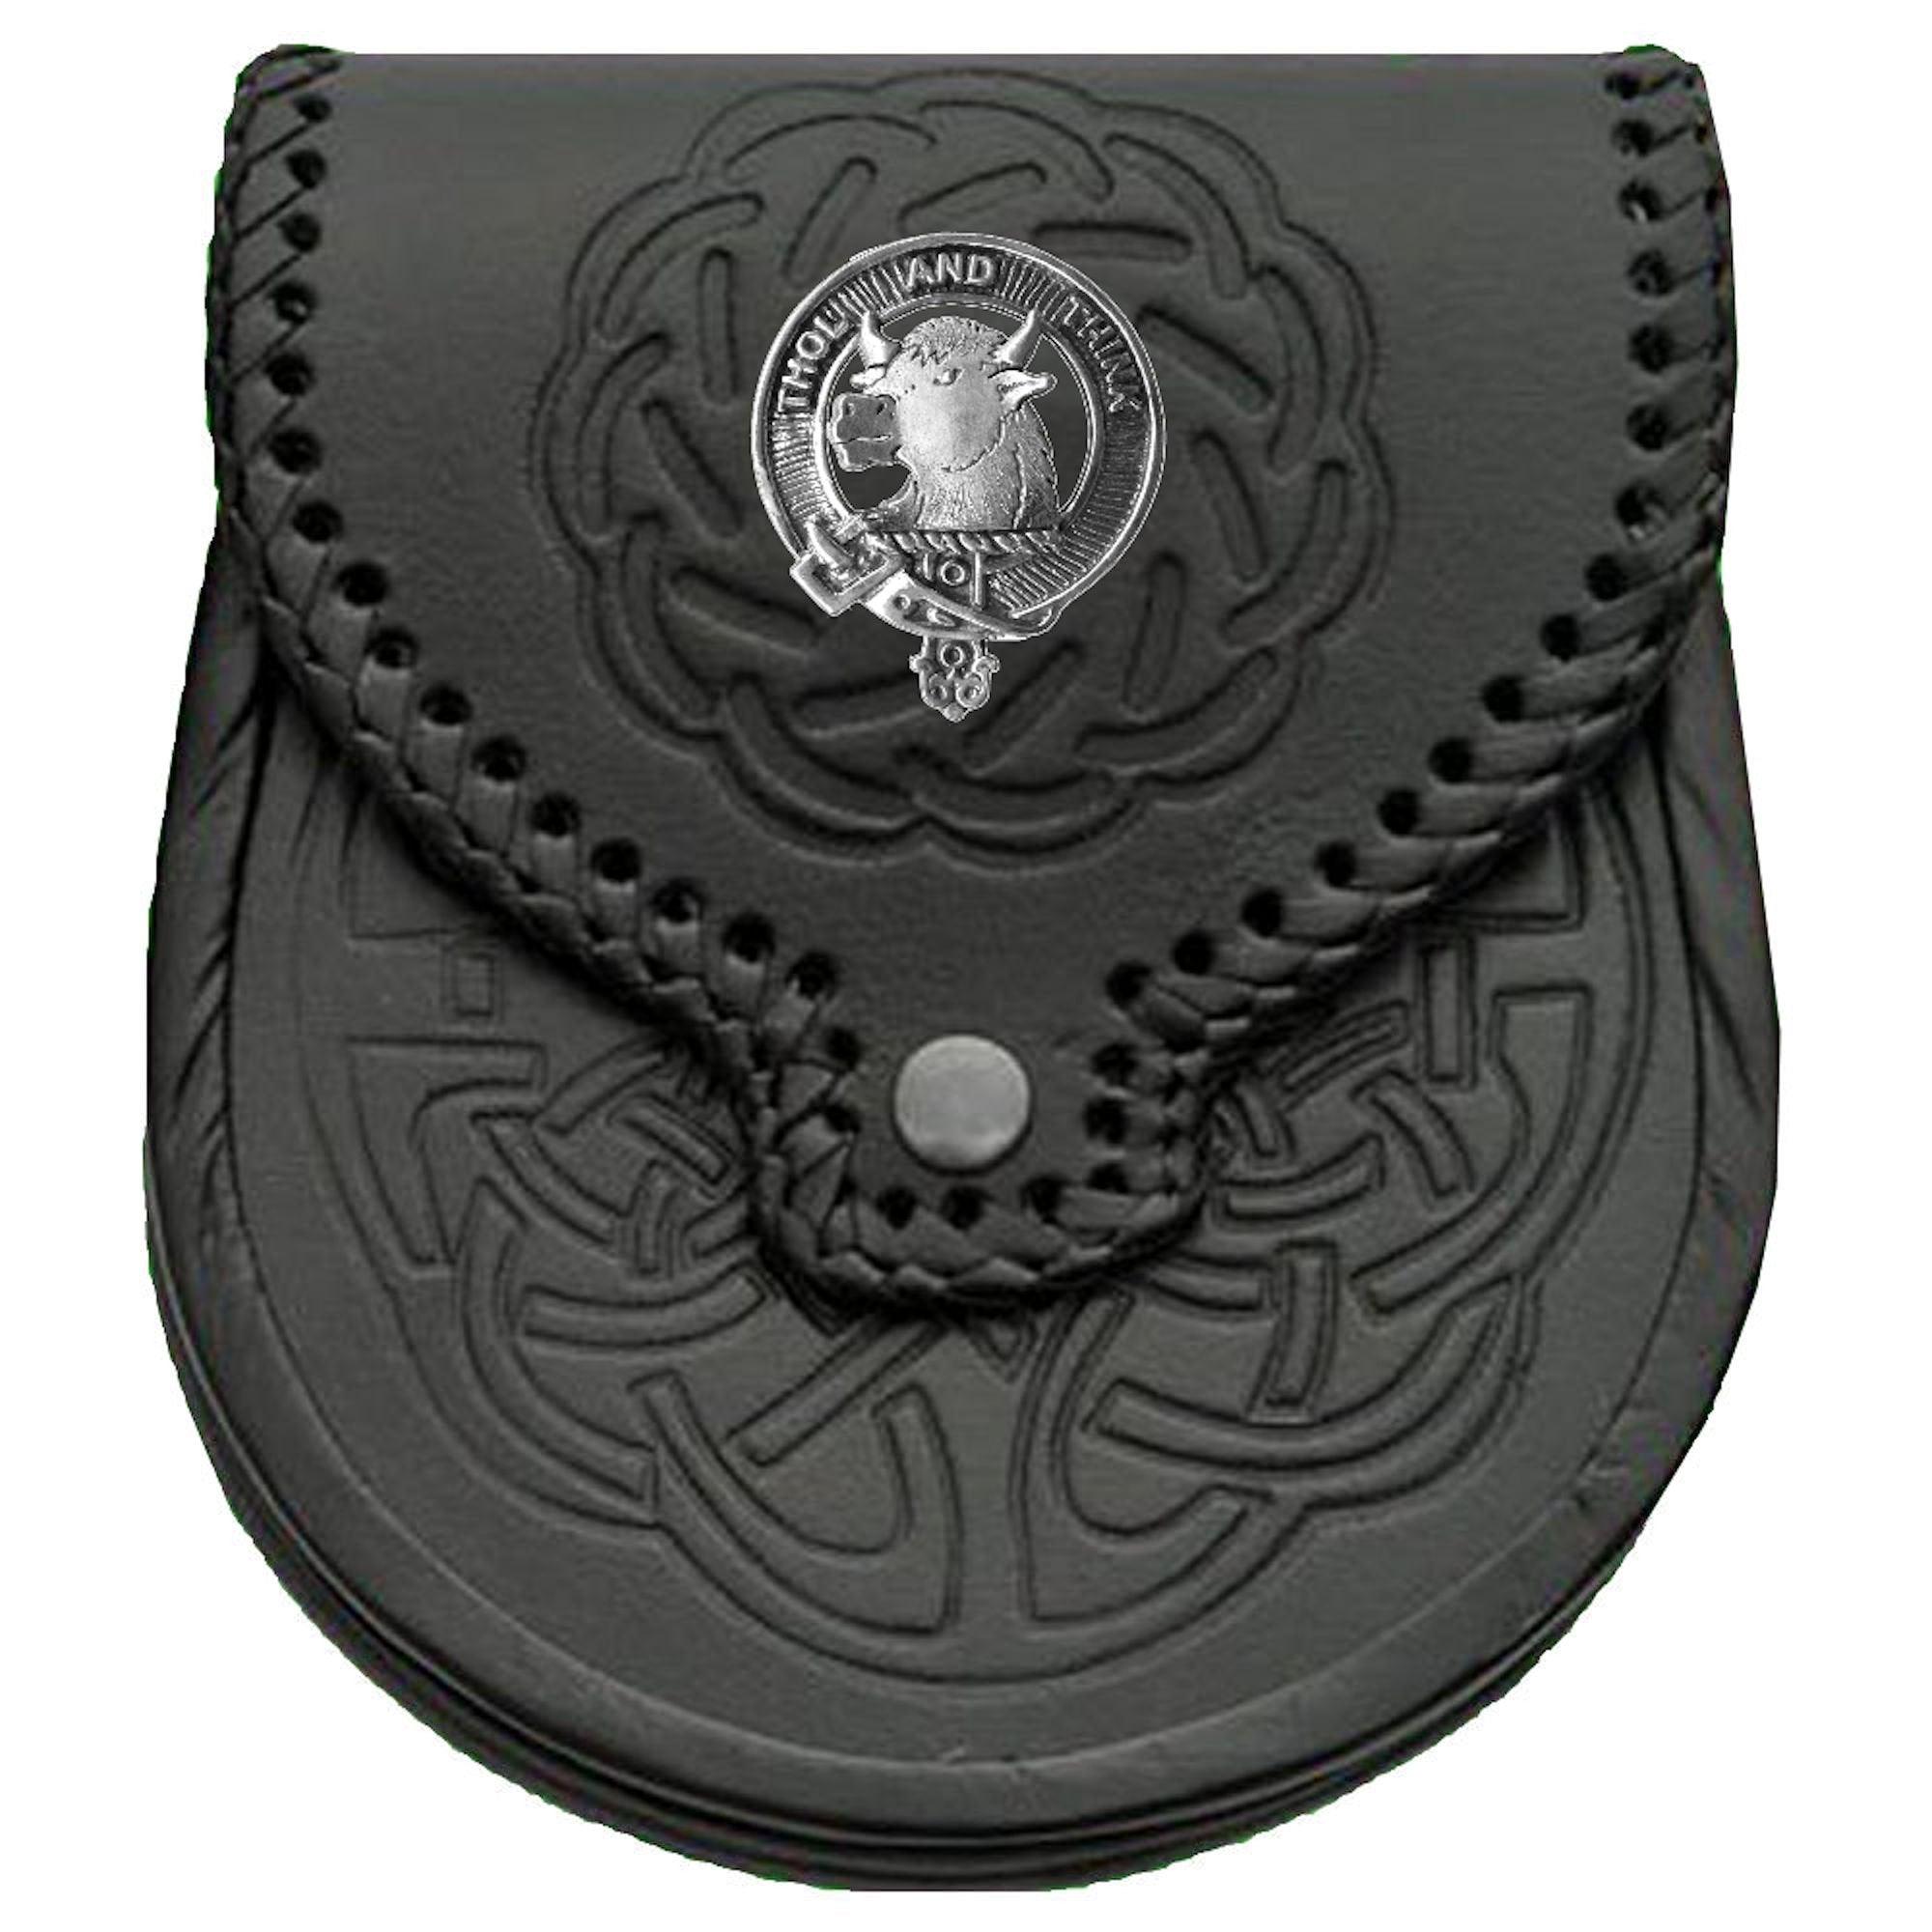 Tweedie Scottish Clan Badge Sporran, Leather